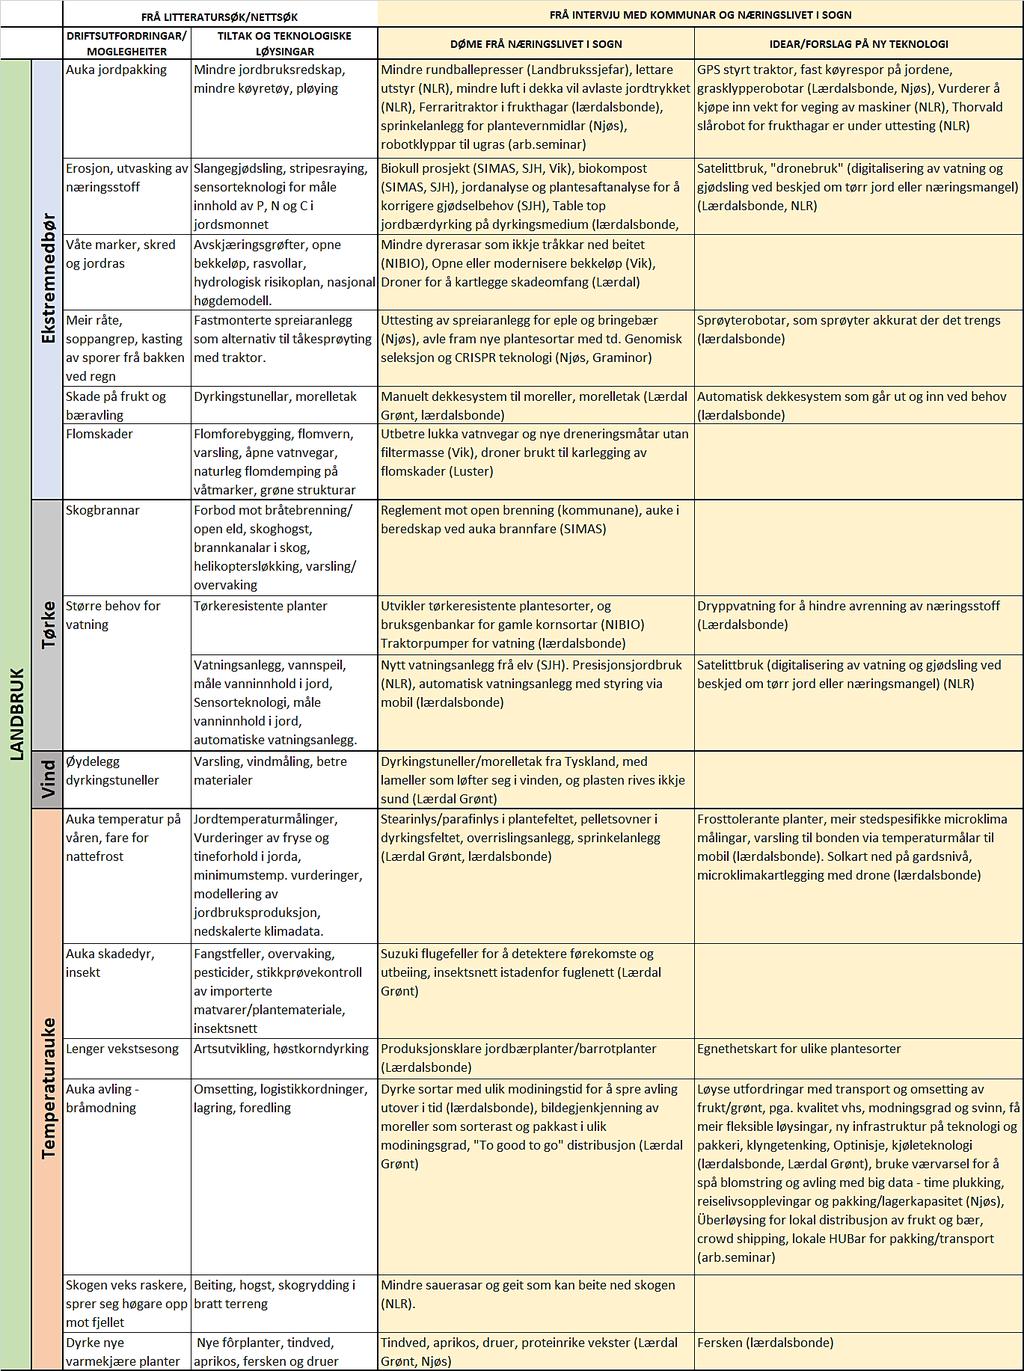 Tabell 2: Klimatilpassingsteknologi i LANDBRUKET (gule